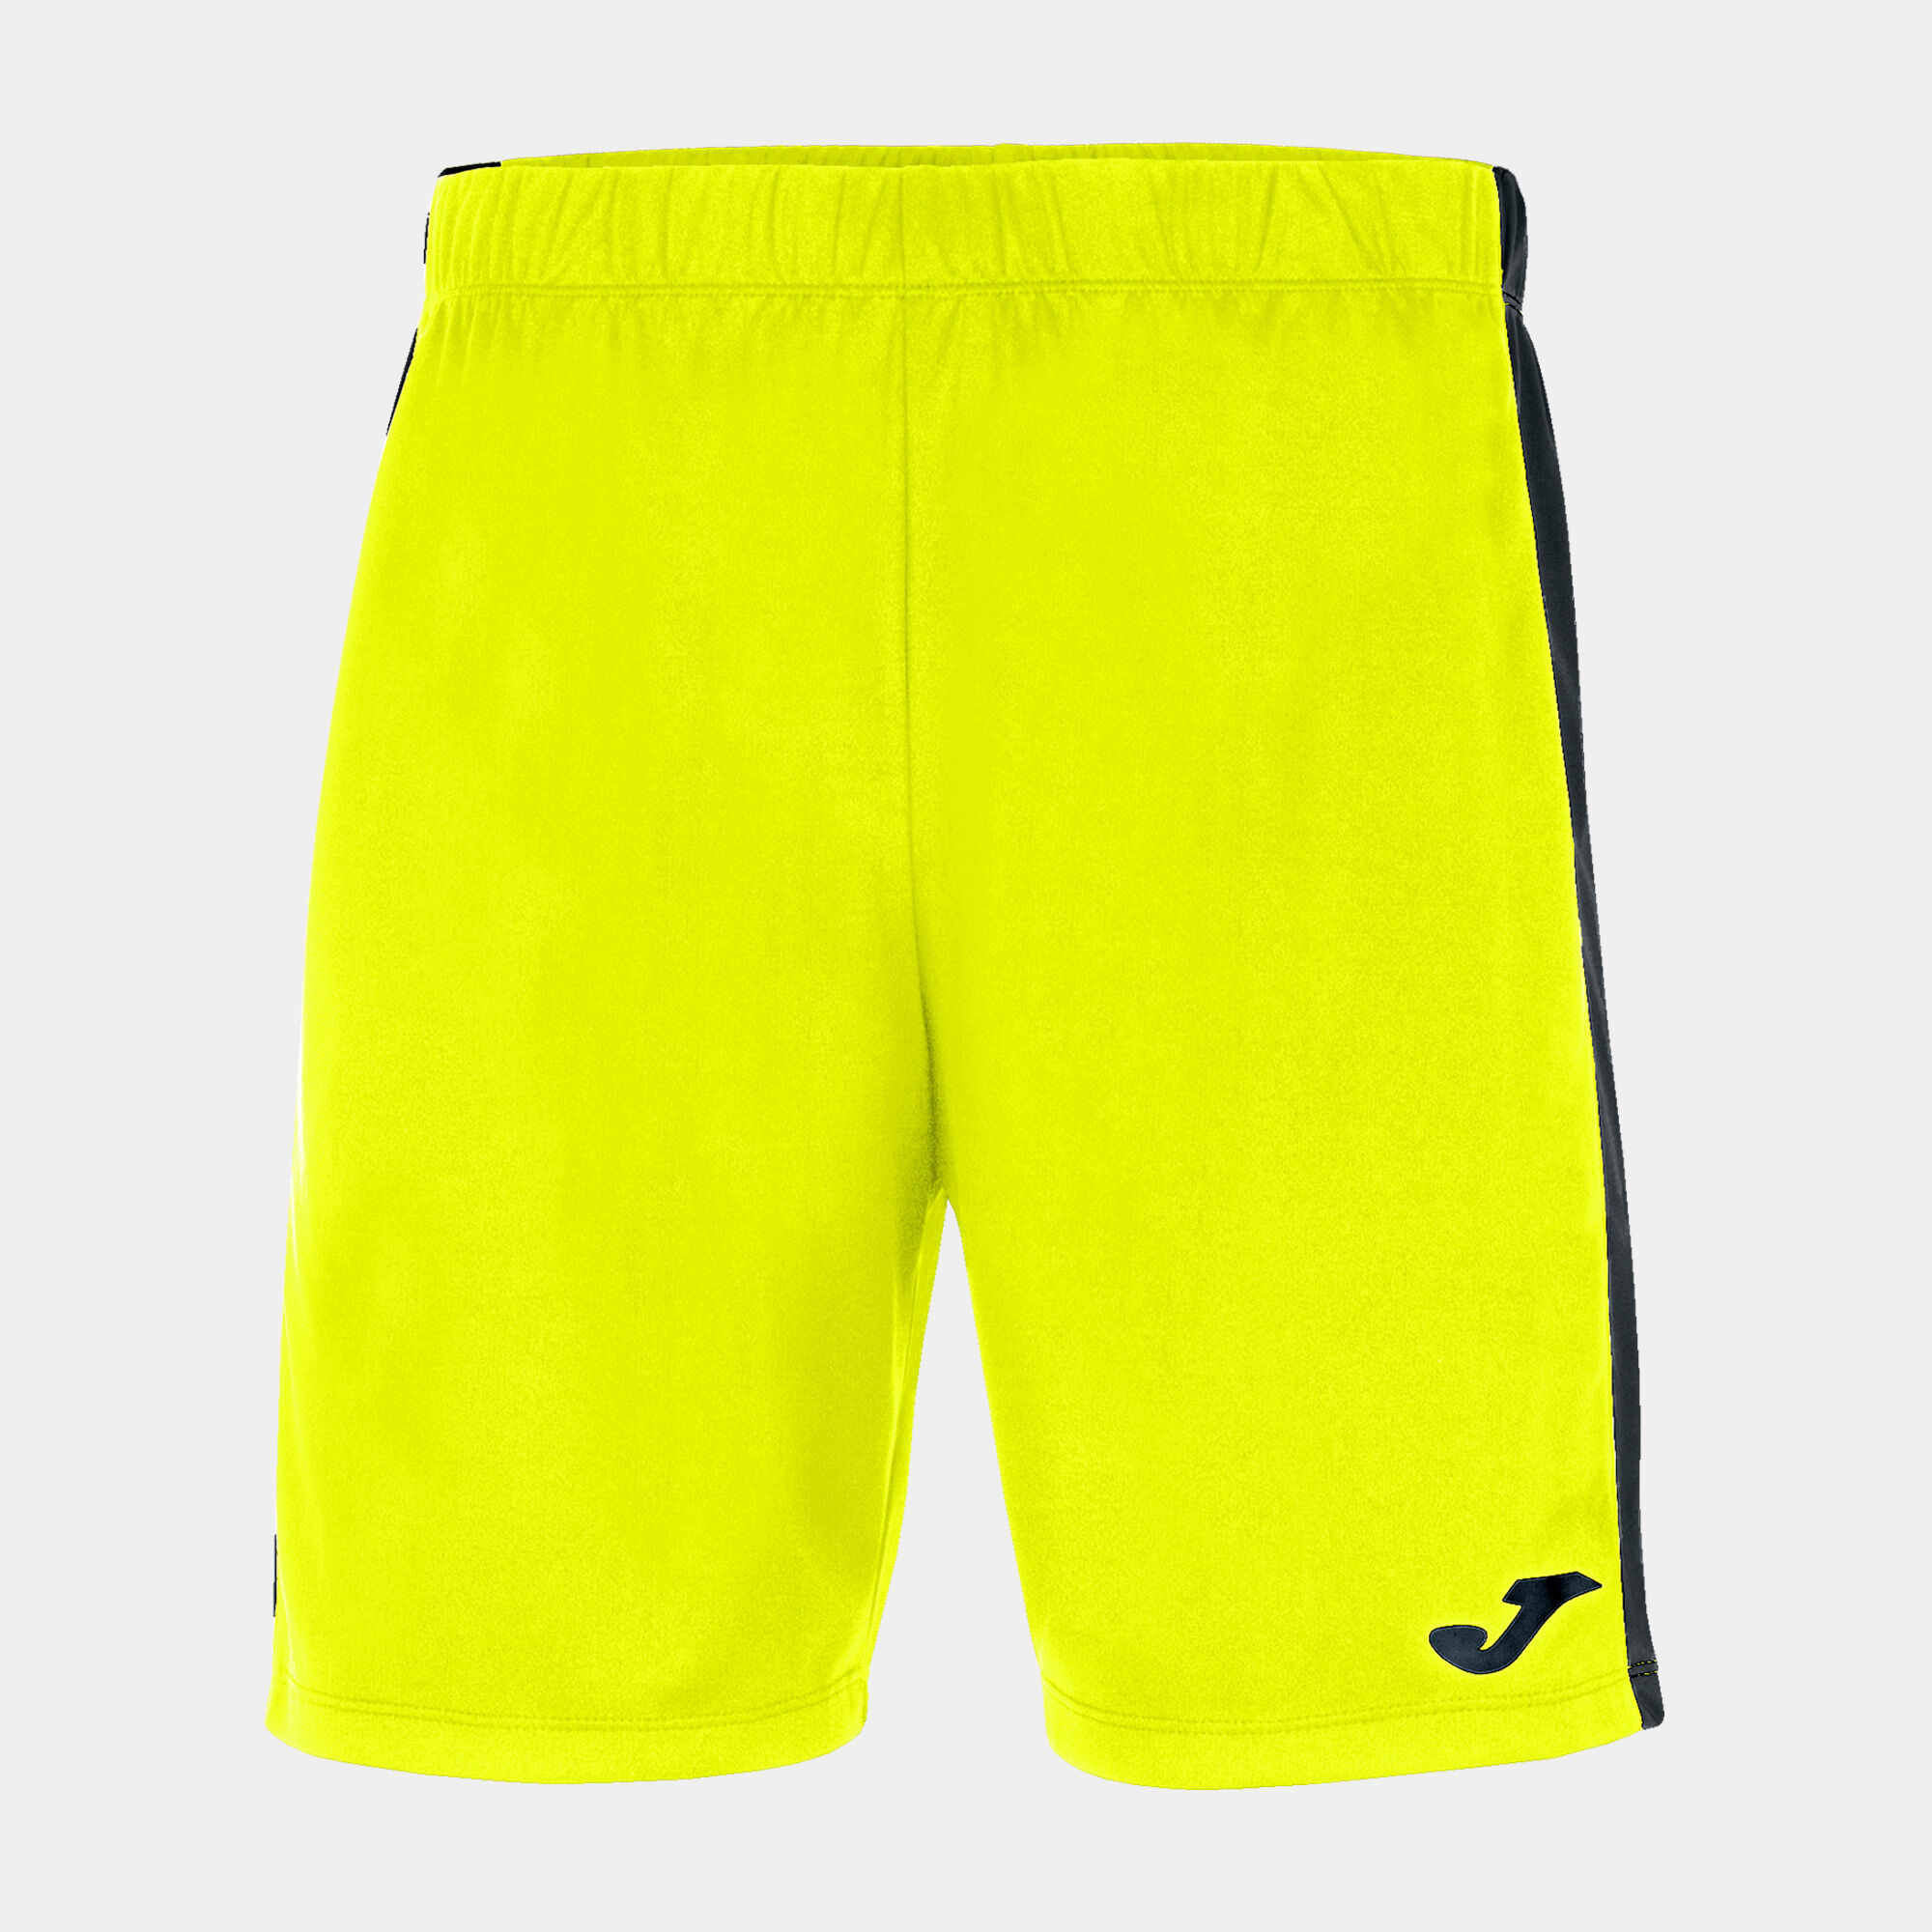 Shorts man Maxi fluorescent yellow black